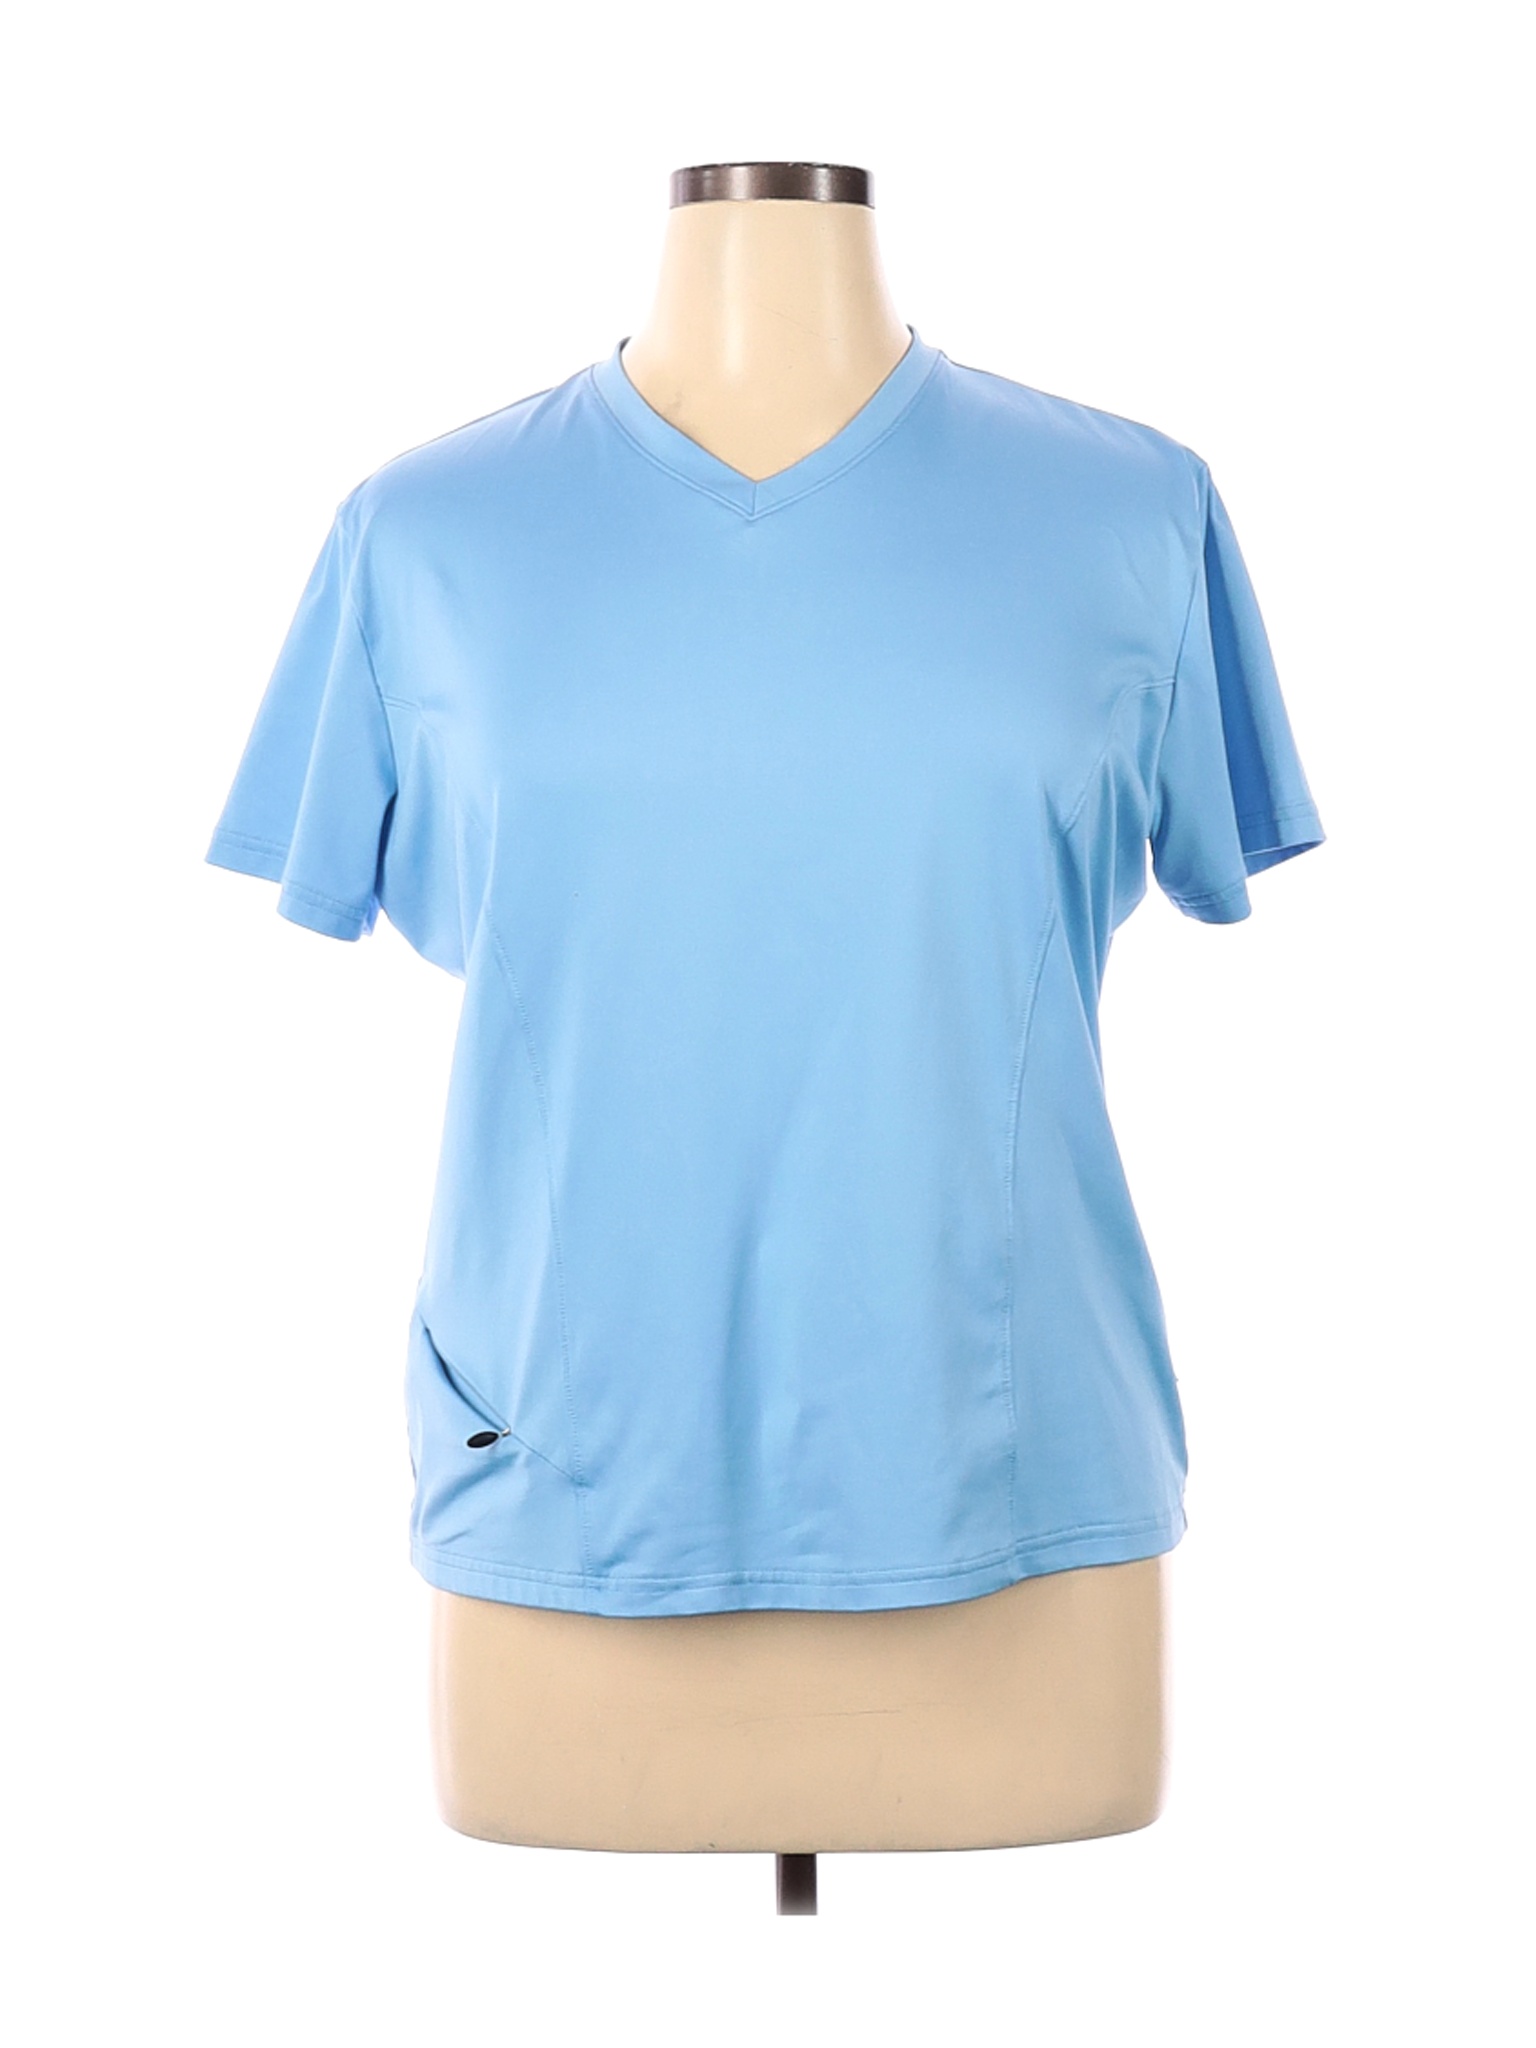 Jockey Solid Blue Active T-Shirt Size XL - 81% off | thredUP